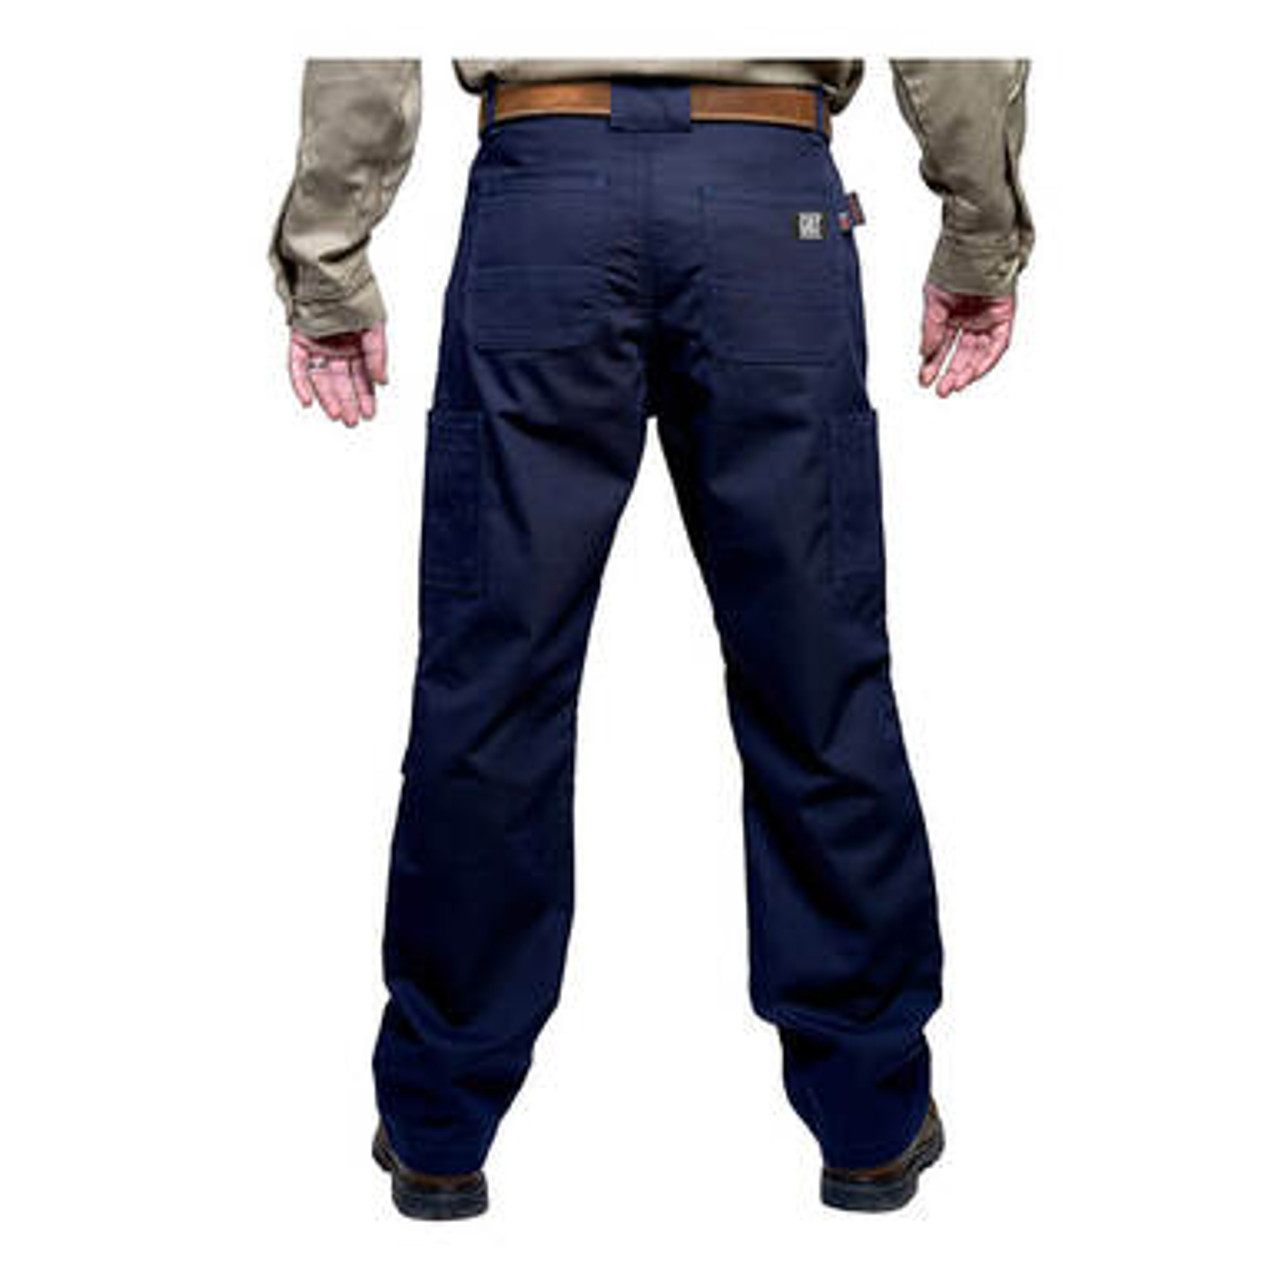 P24NV Men's Cargo Industrial Work Pant, Navy Blue Industrial Pants